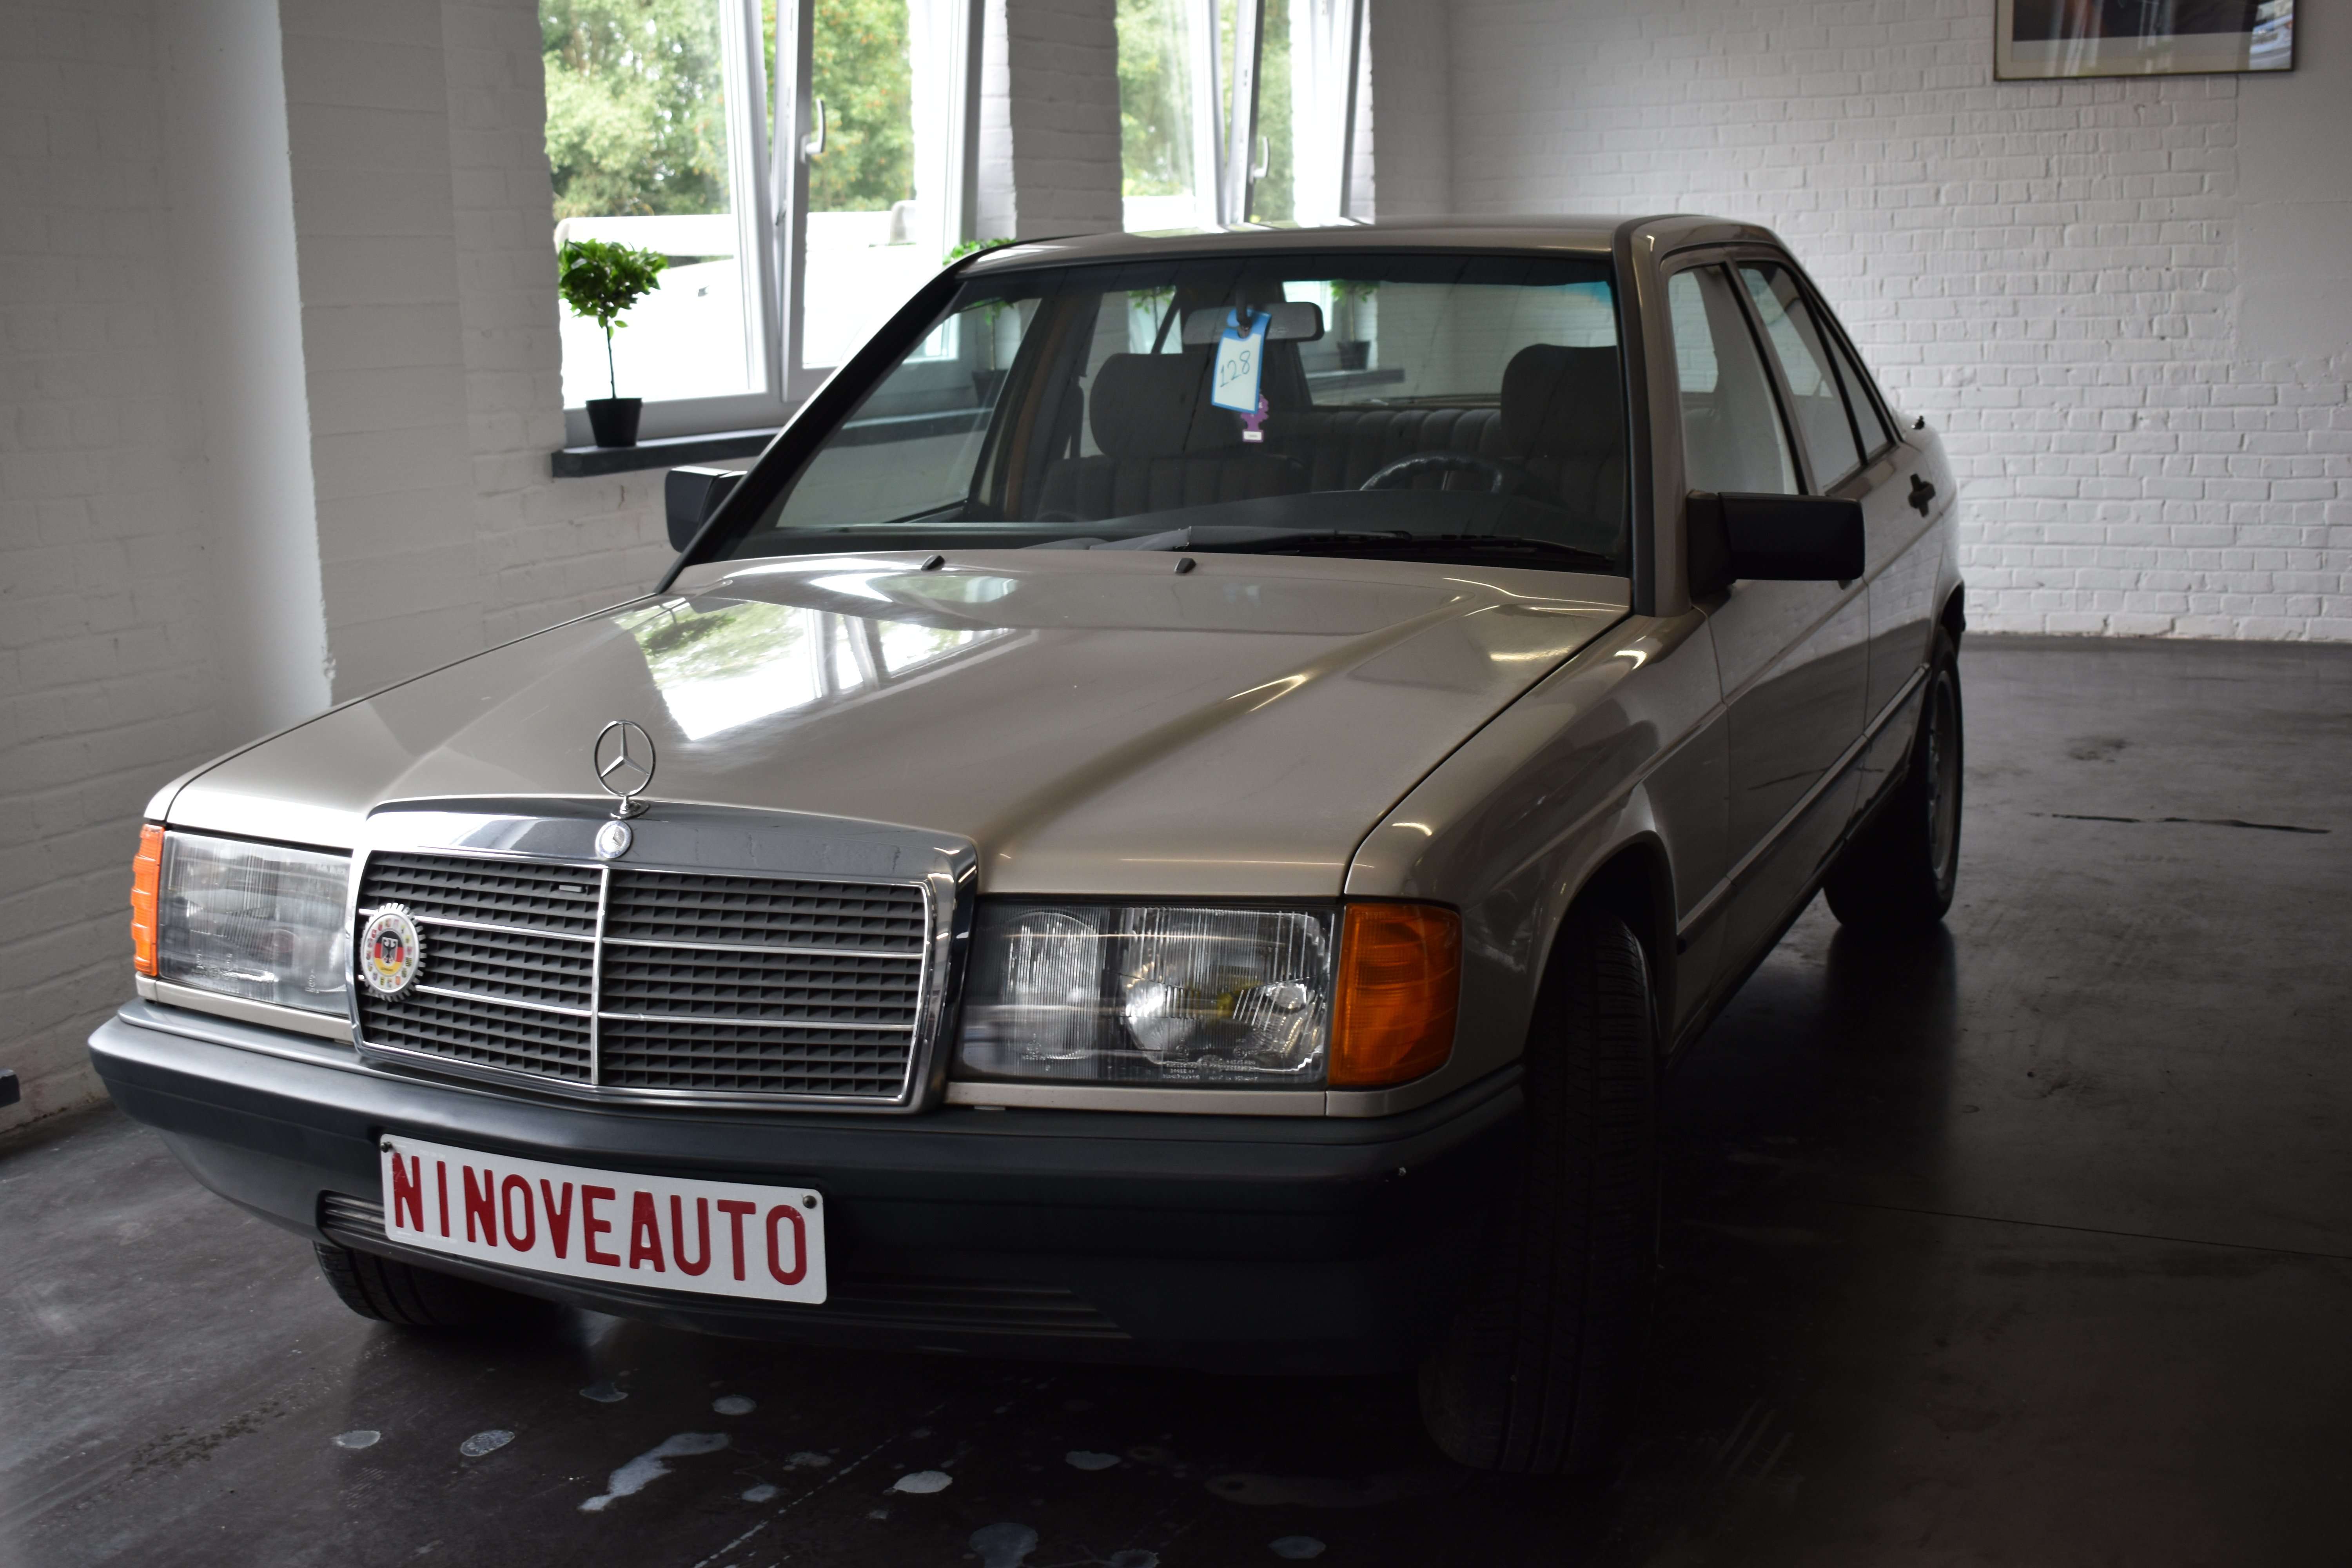 Ninove auto - Mercedes-Benz 190